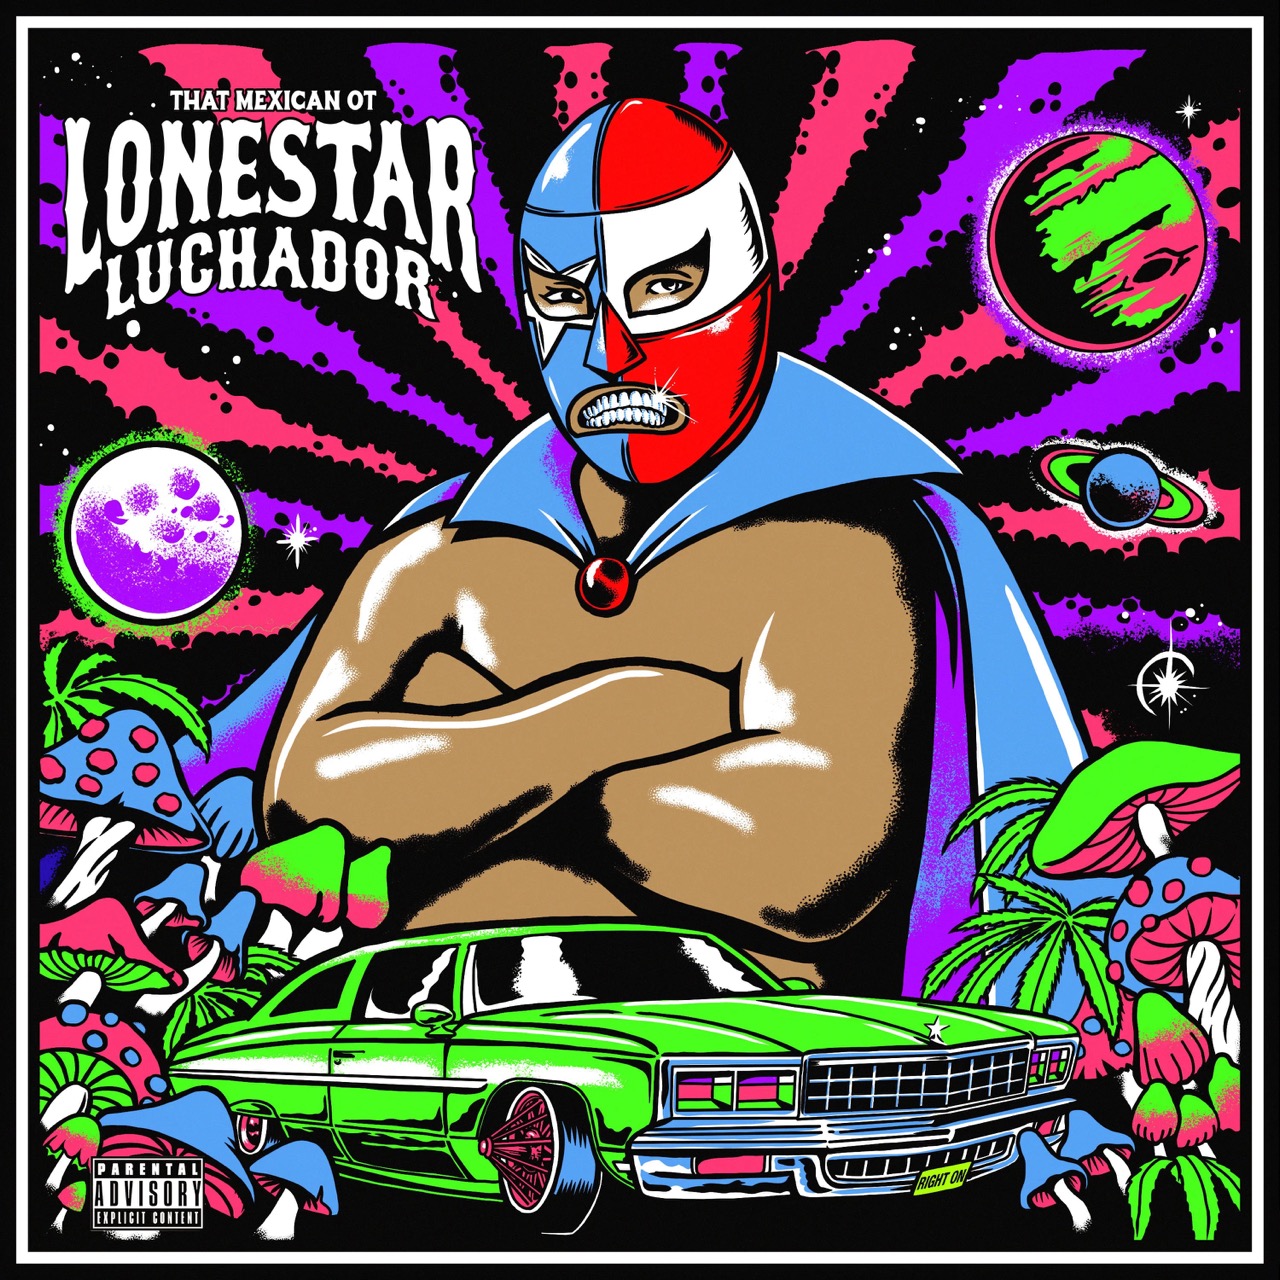 That Mexican OT -- Lonestar Luchador